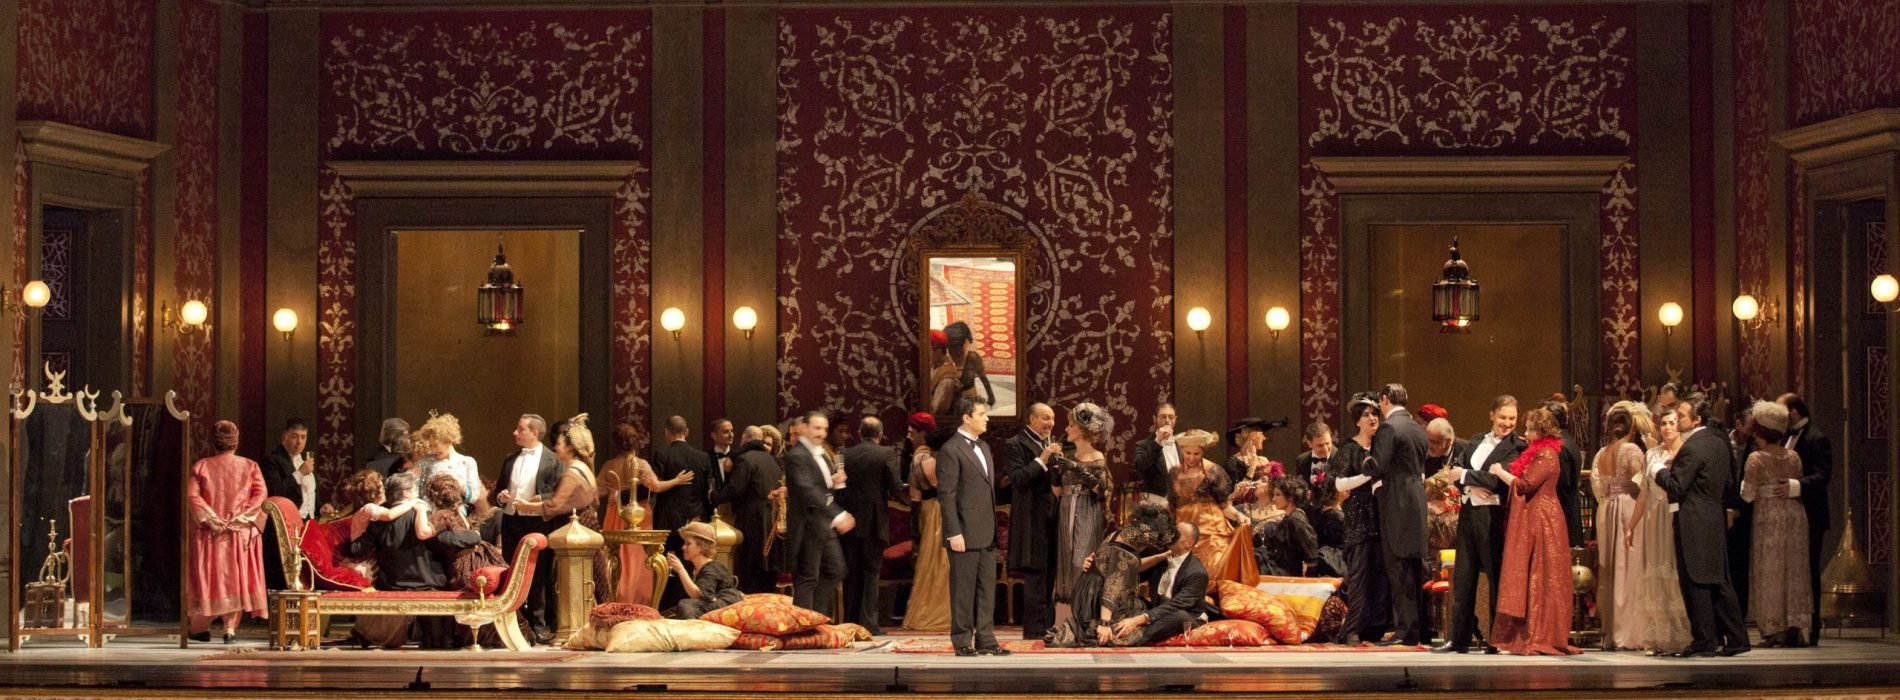 Teatro San Carlo, la traviata di Verdi ha la regia di Ozpetek